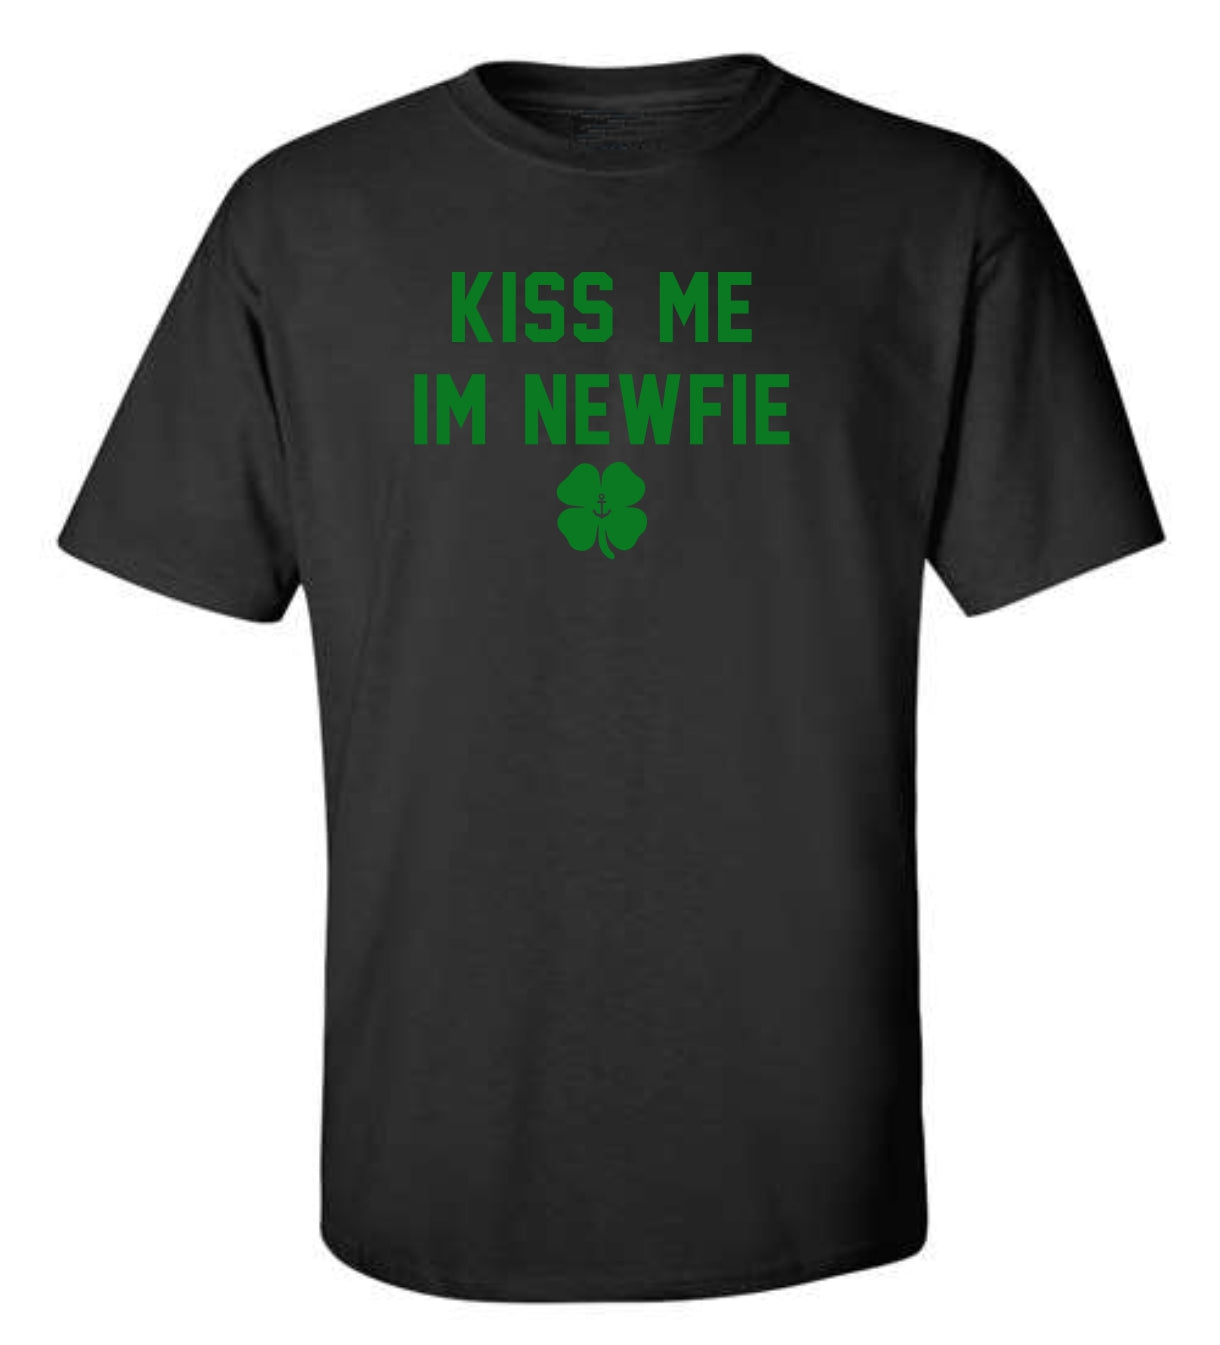 "Kiss Me I'm Newfie" T-Shirt